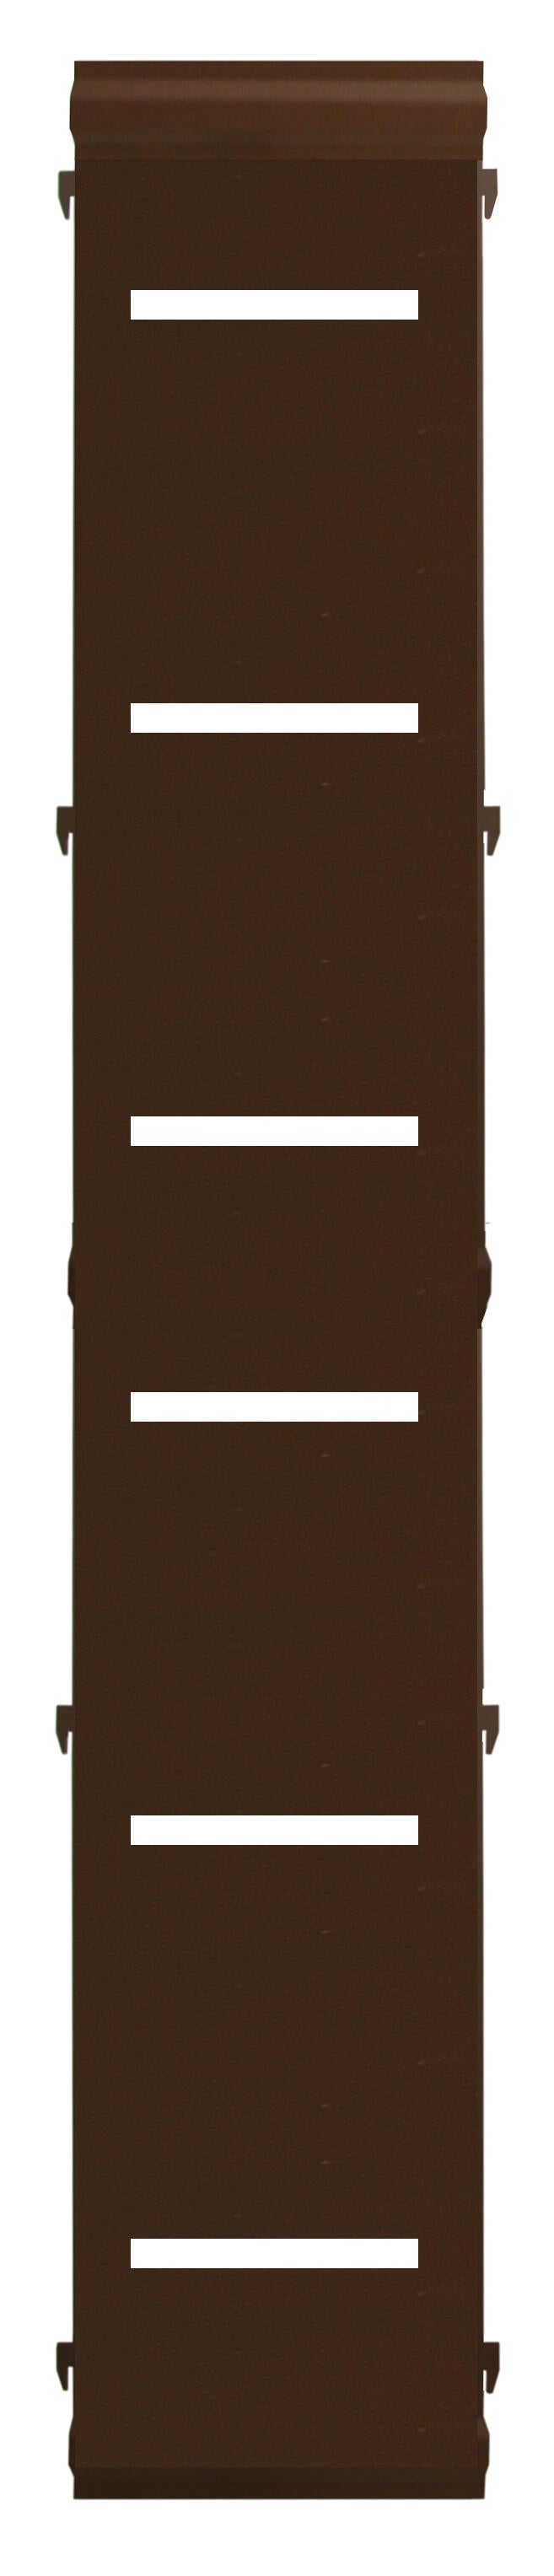 Panel remate valla acero galvanizado franja rayas marrón forja 144x24,5 cm